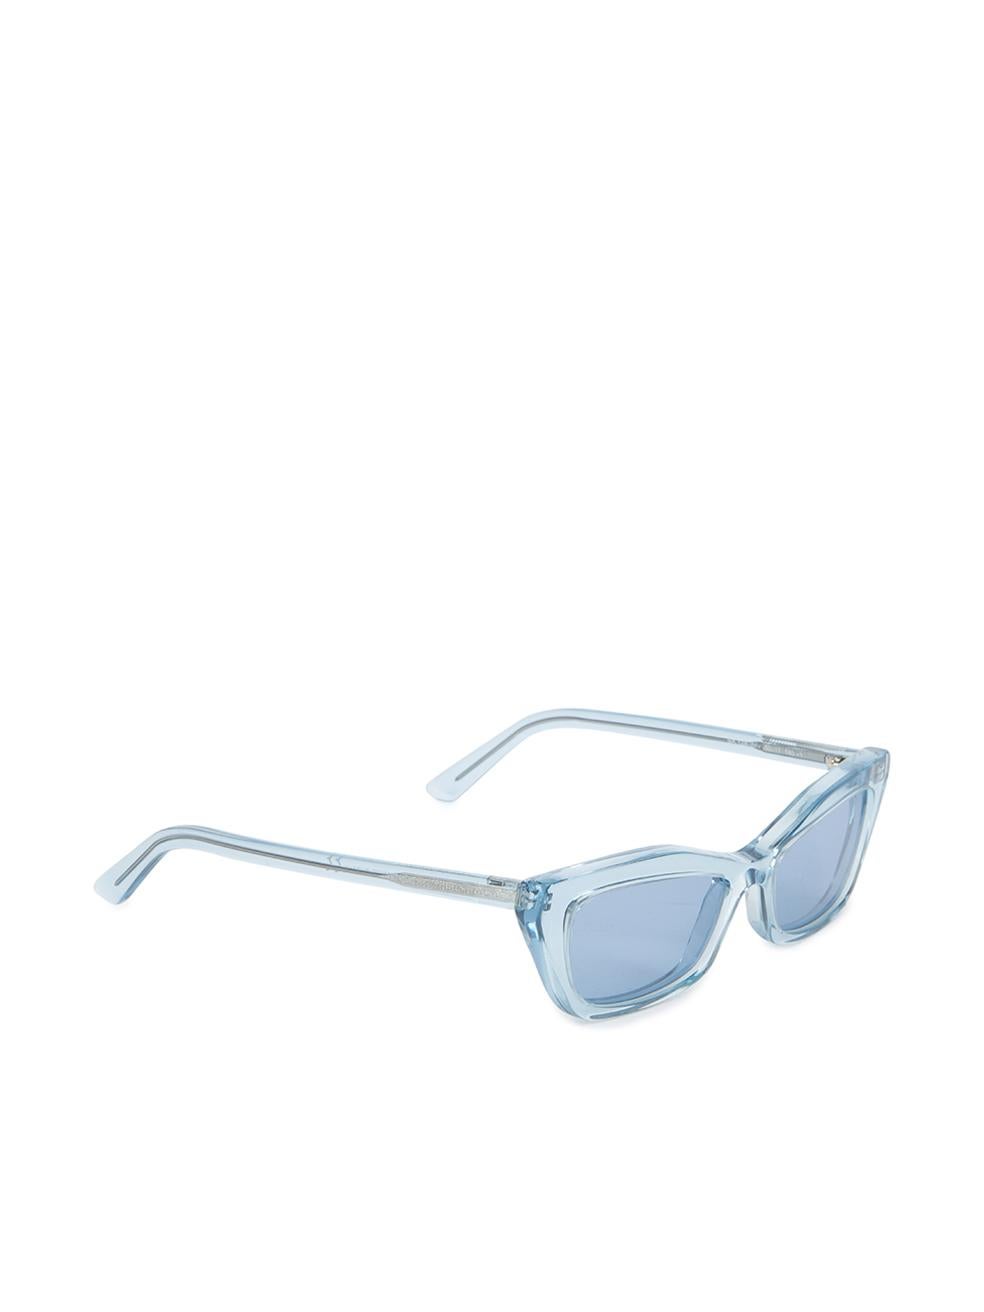 Pre-Loved Balenciaga Women's Blue Rectangular Framed Sunglasses 2